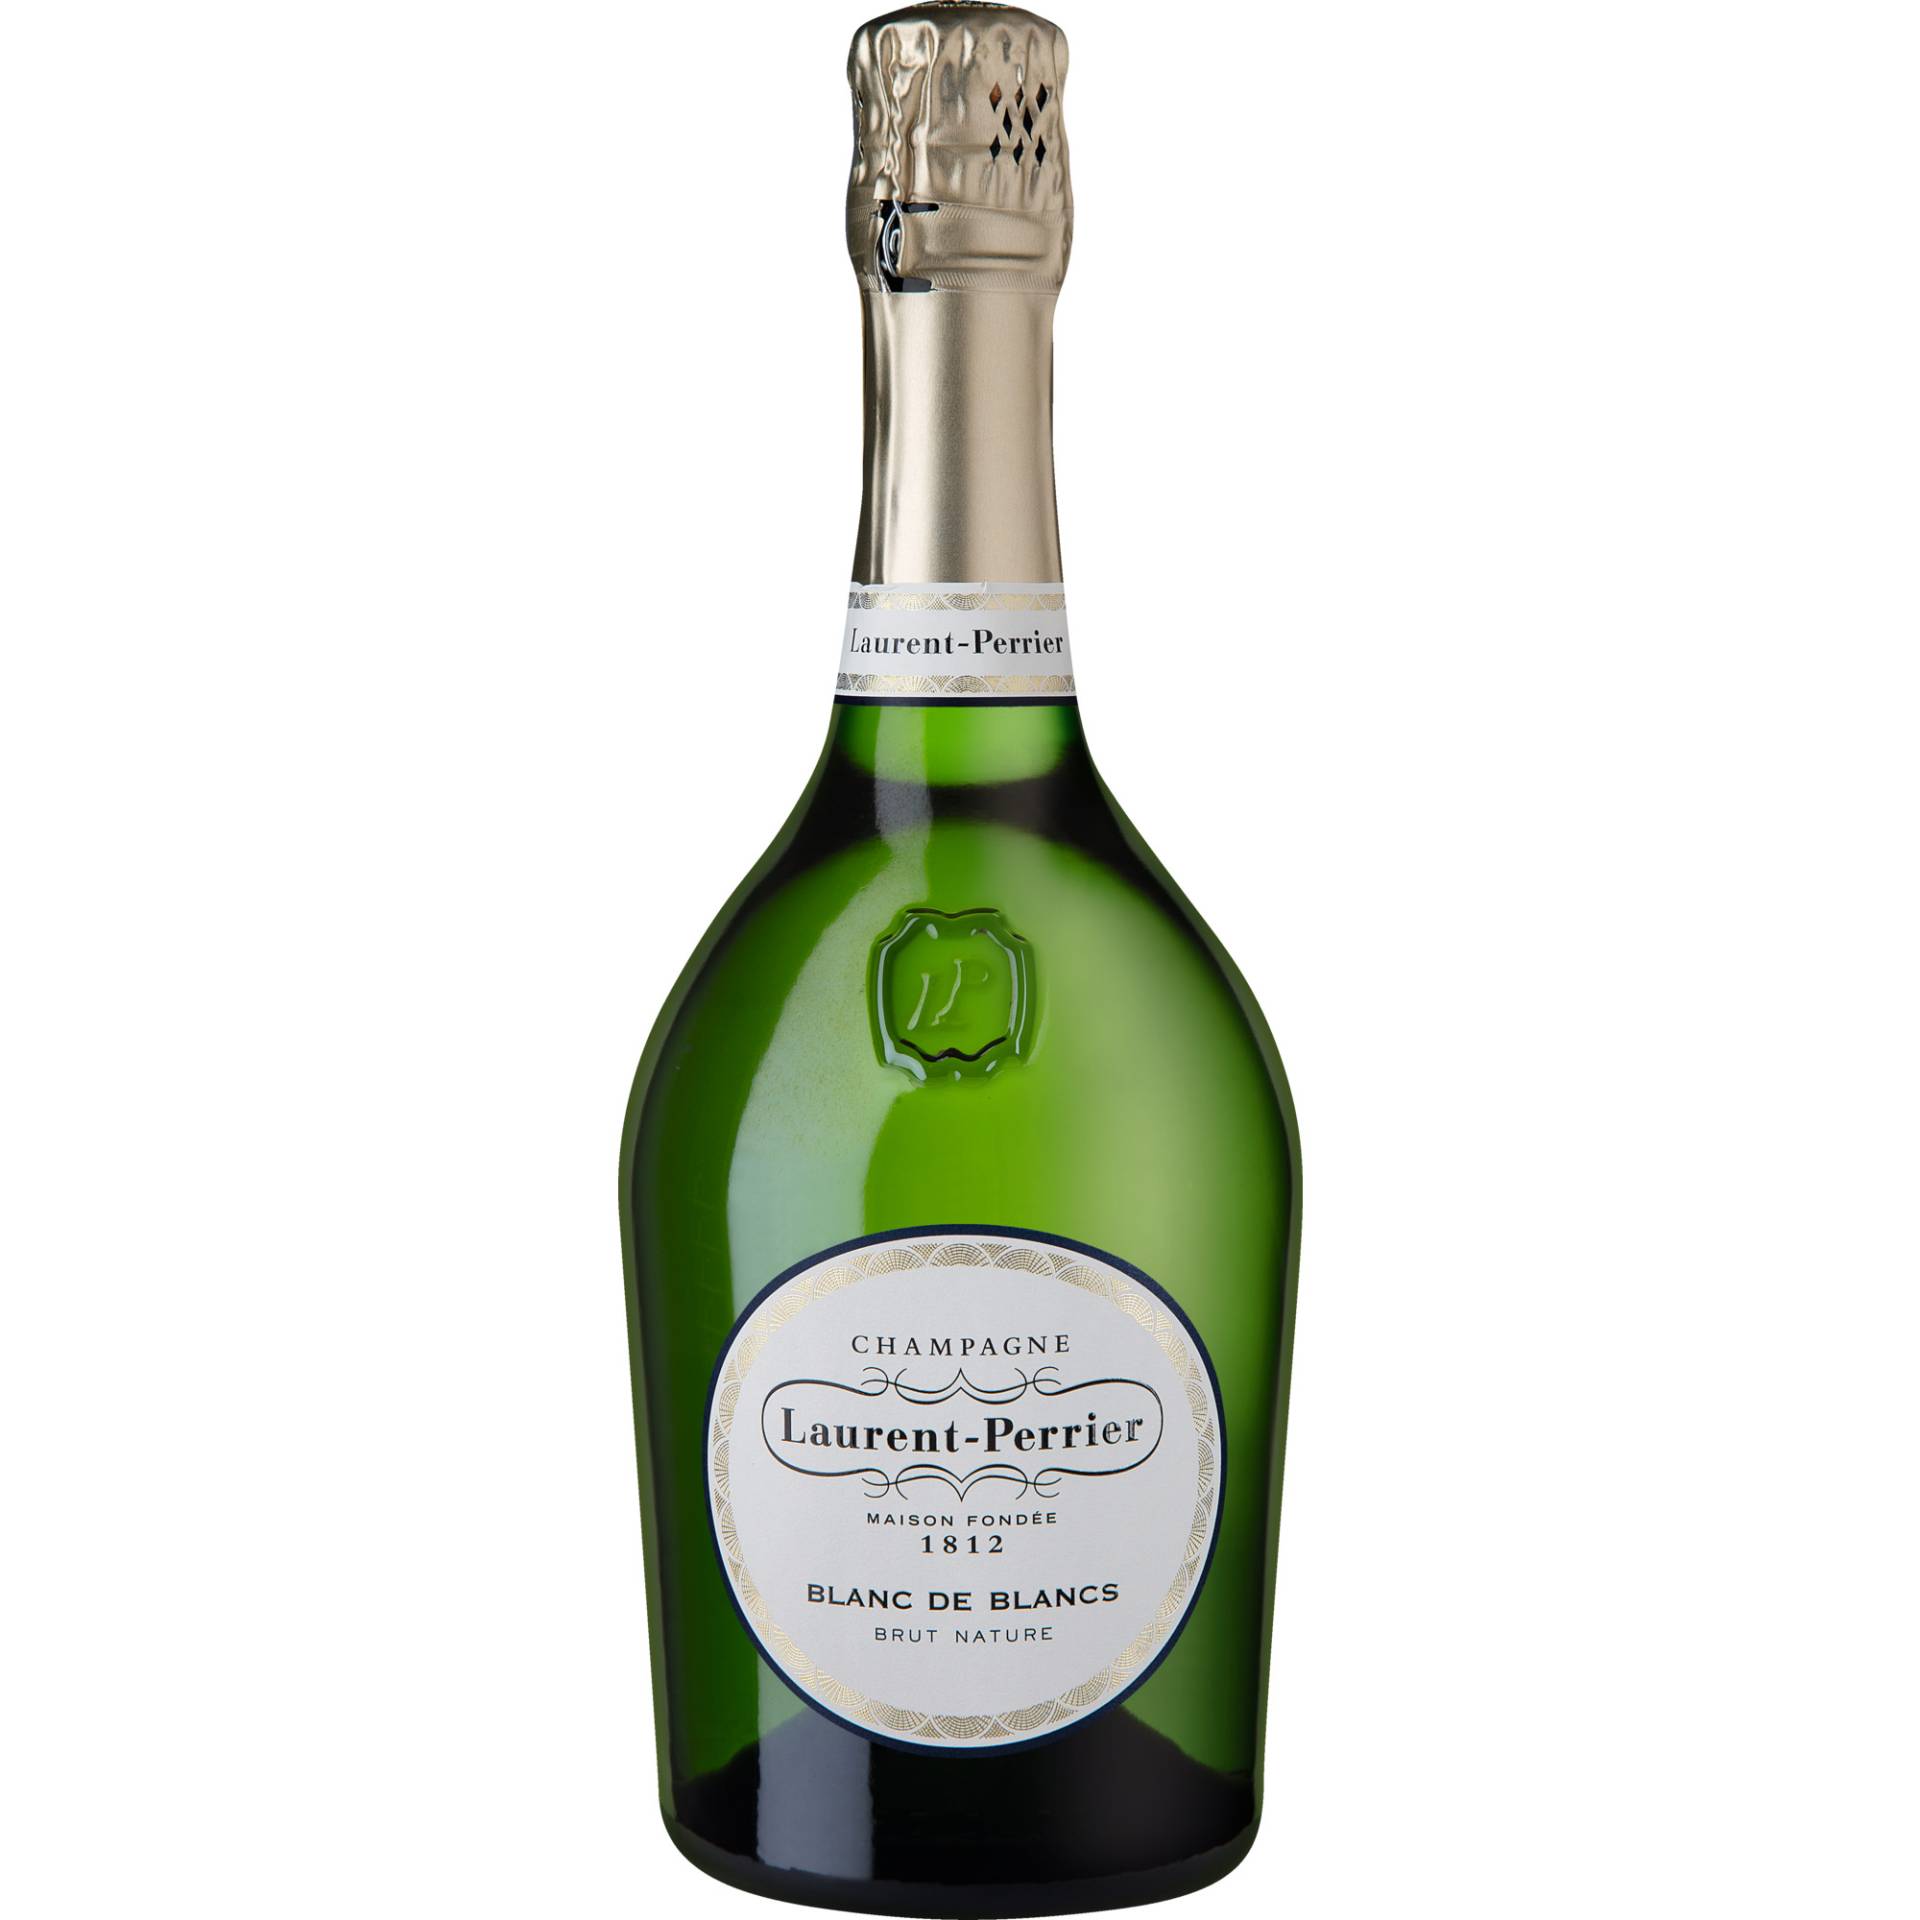 Champagne Laurent-Perrier Blanc de Blancs, Brut Nature, Champagne AC, Geschenketui, Magnum, Champagne, Schaumwein von Champagne Laurent-Perrier, Tours-sur-Marne, France